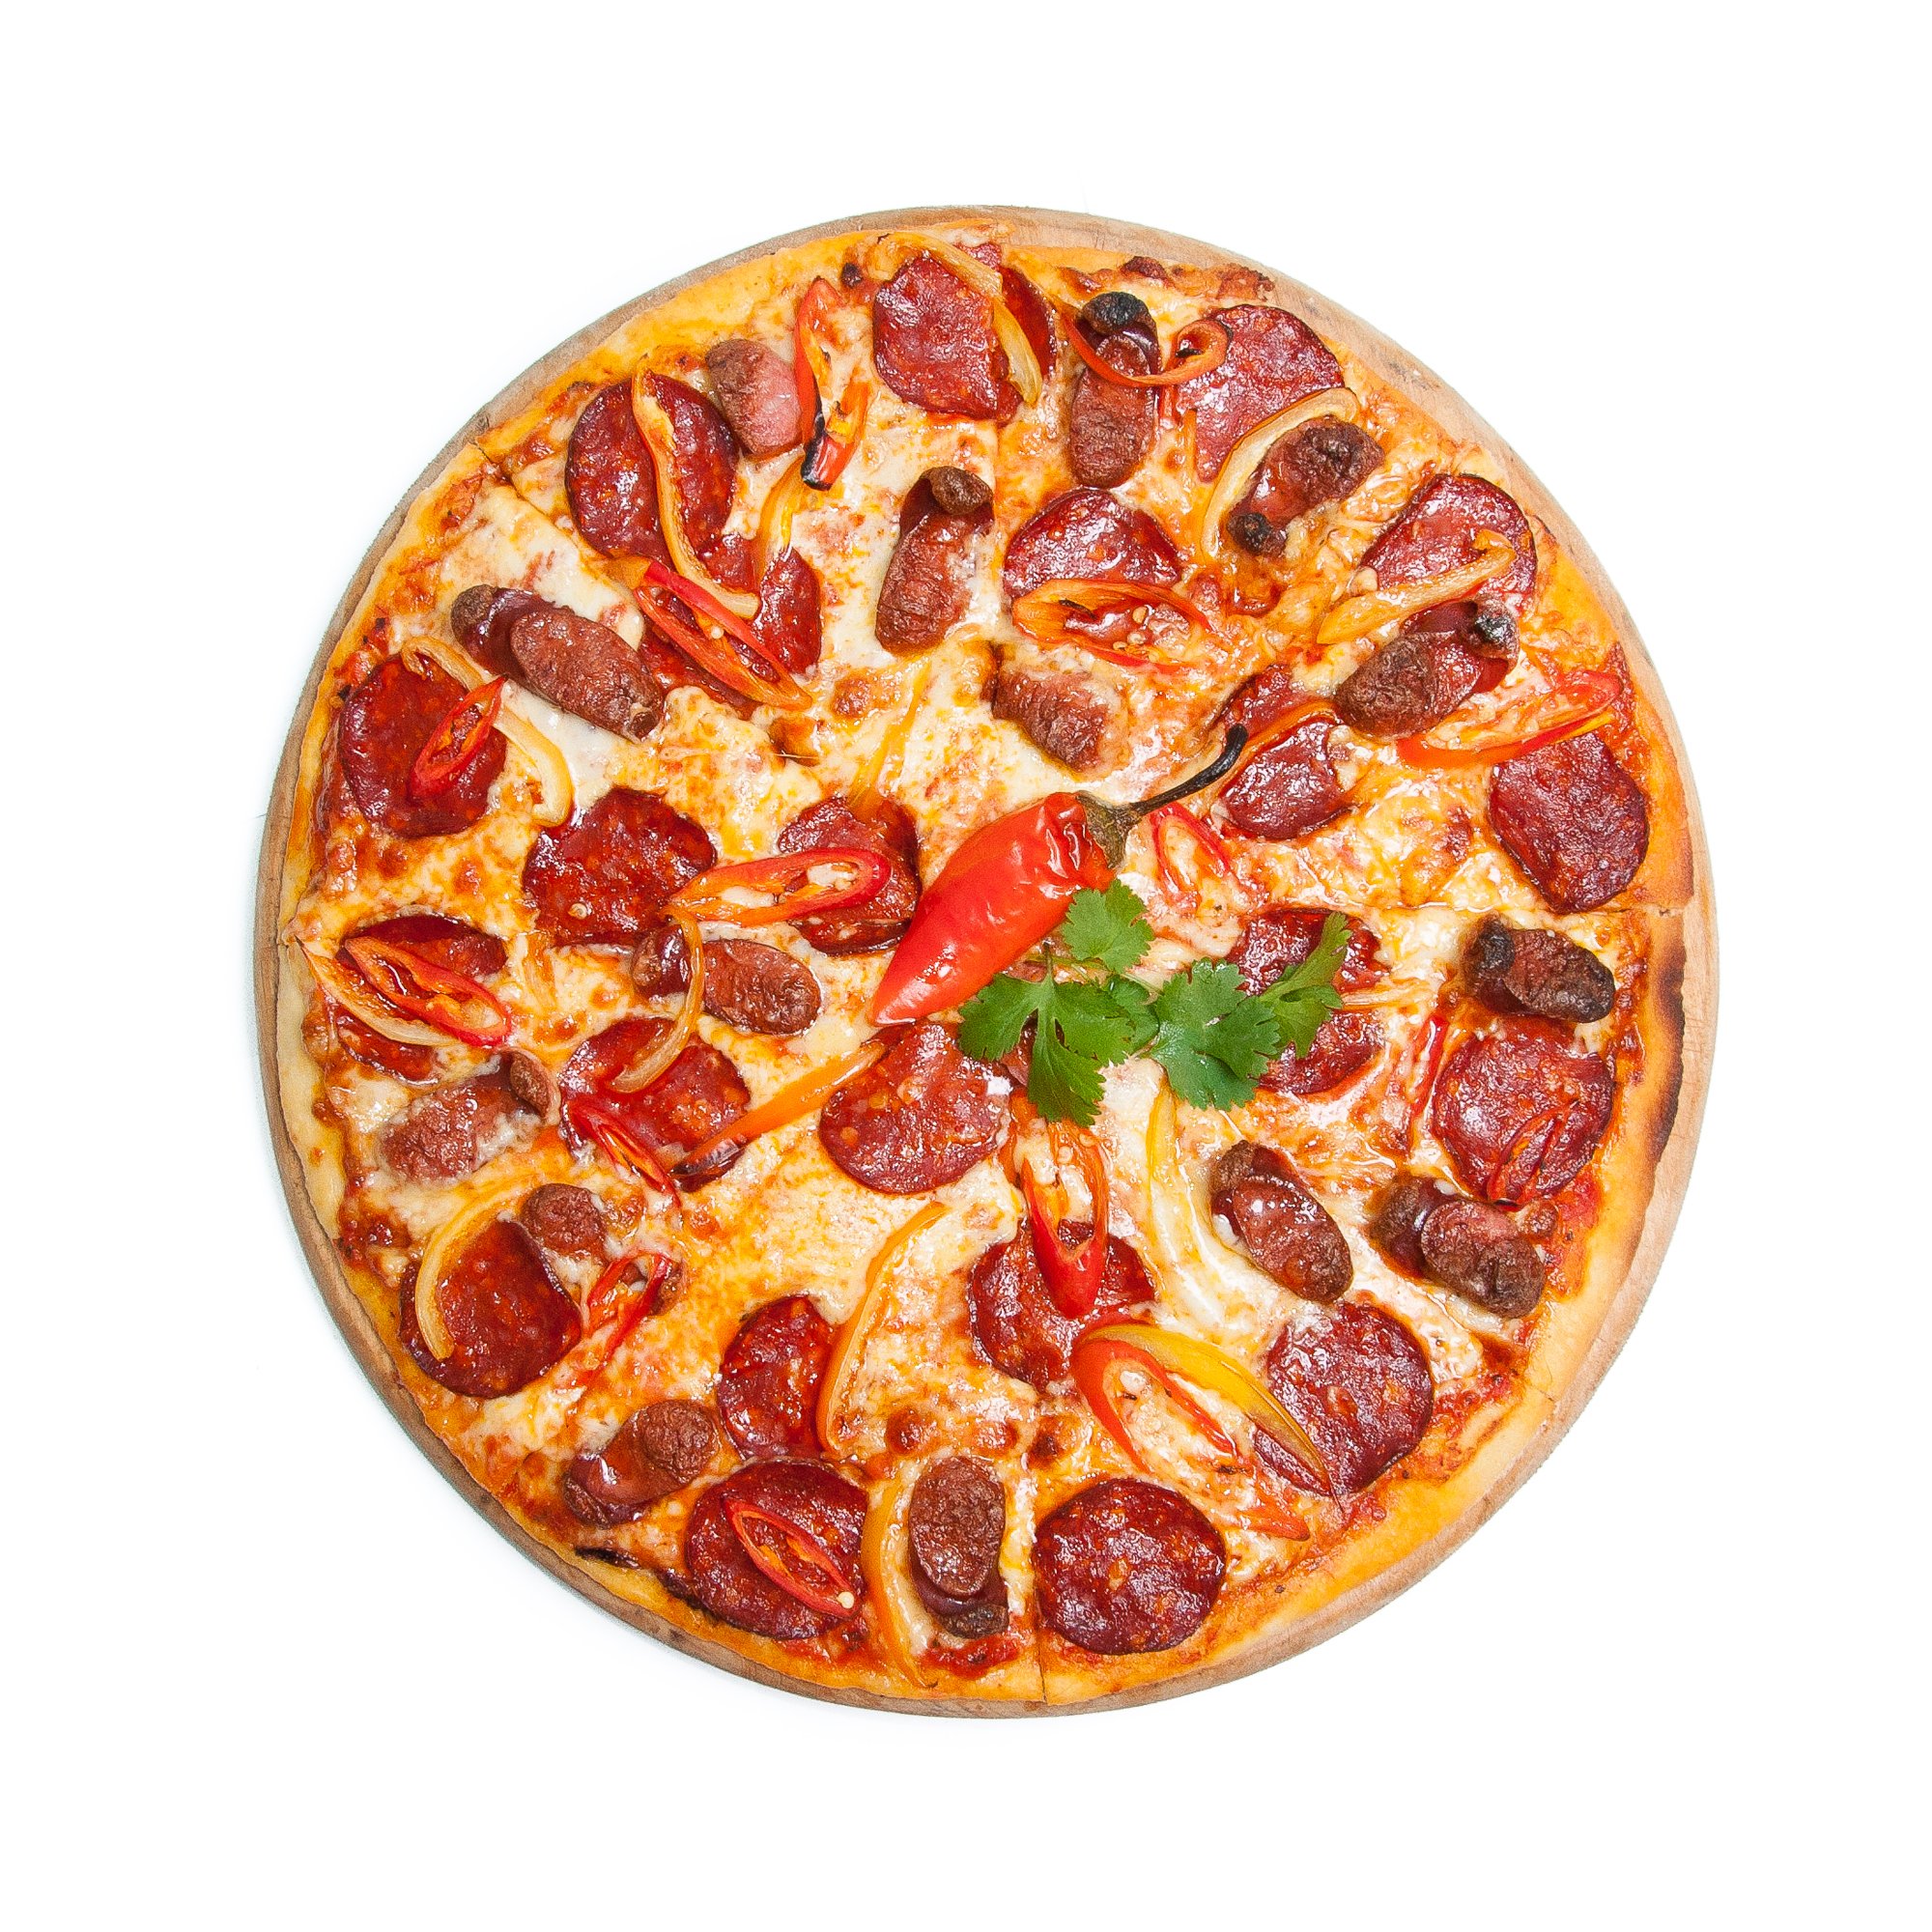 пицца фото на белом фоне пепперони фото 40